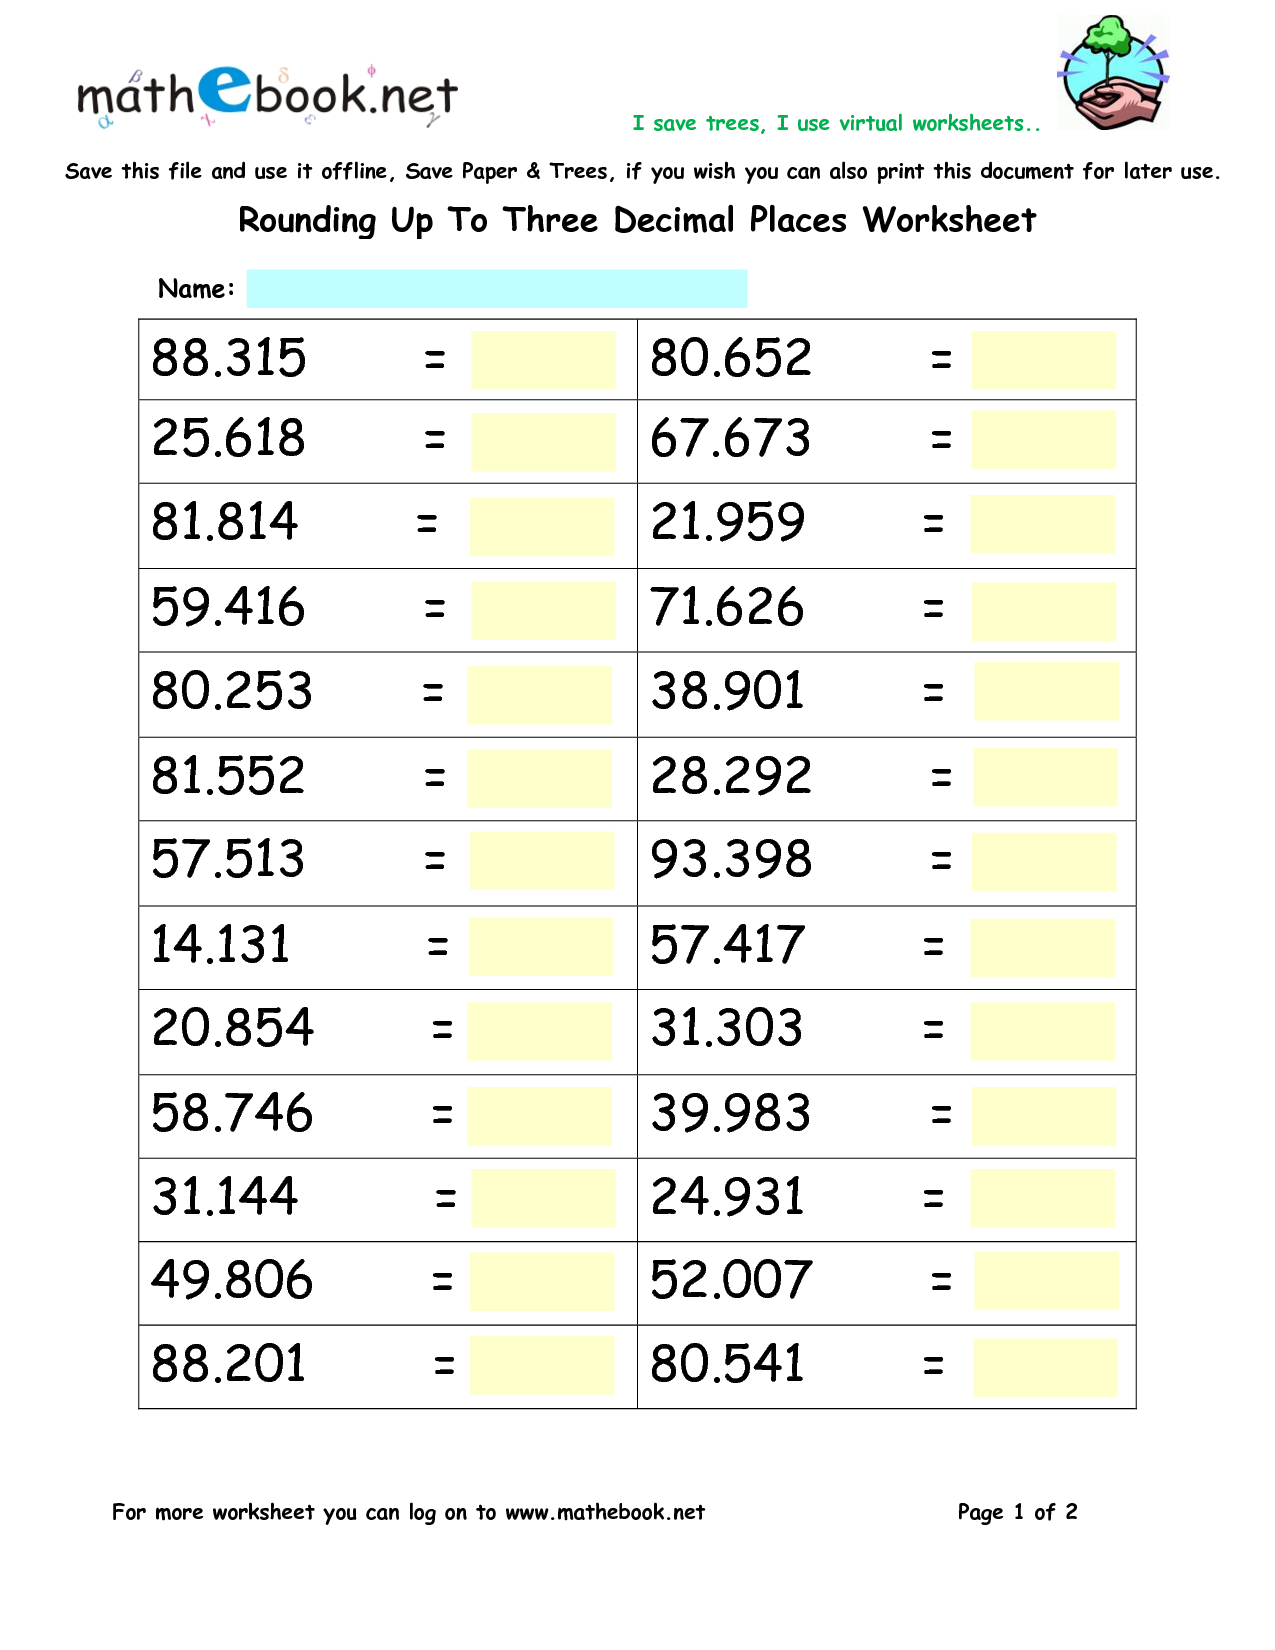 math-worksheets-rounding-decimals-831198-free-worksheets-samples